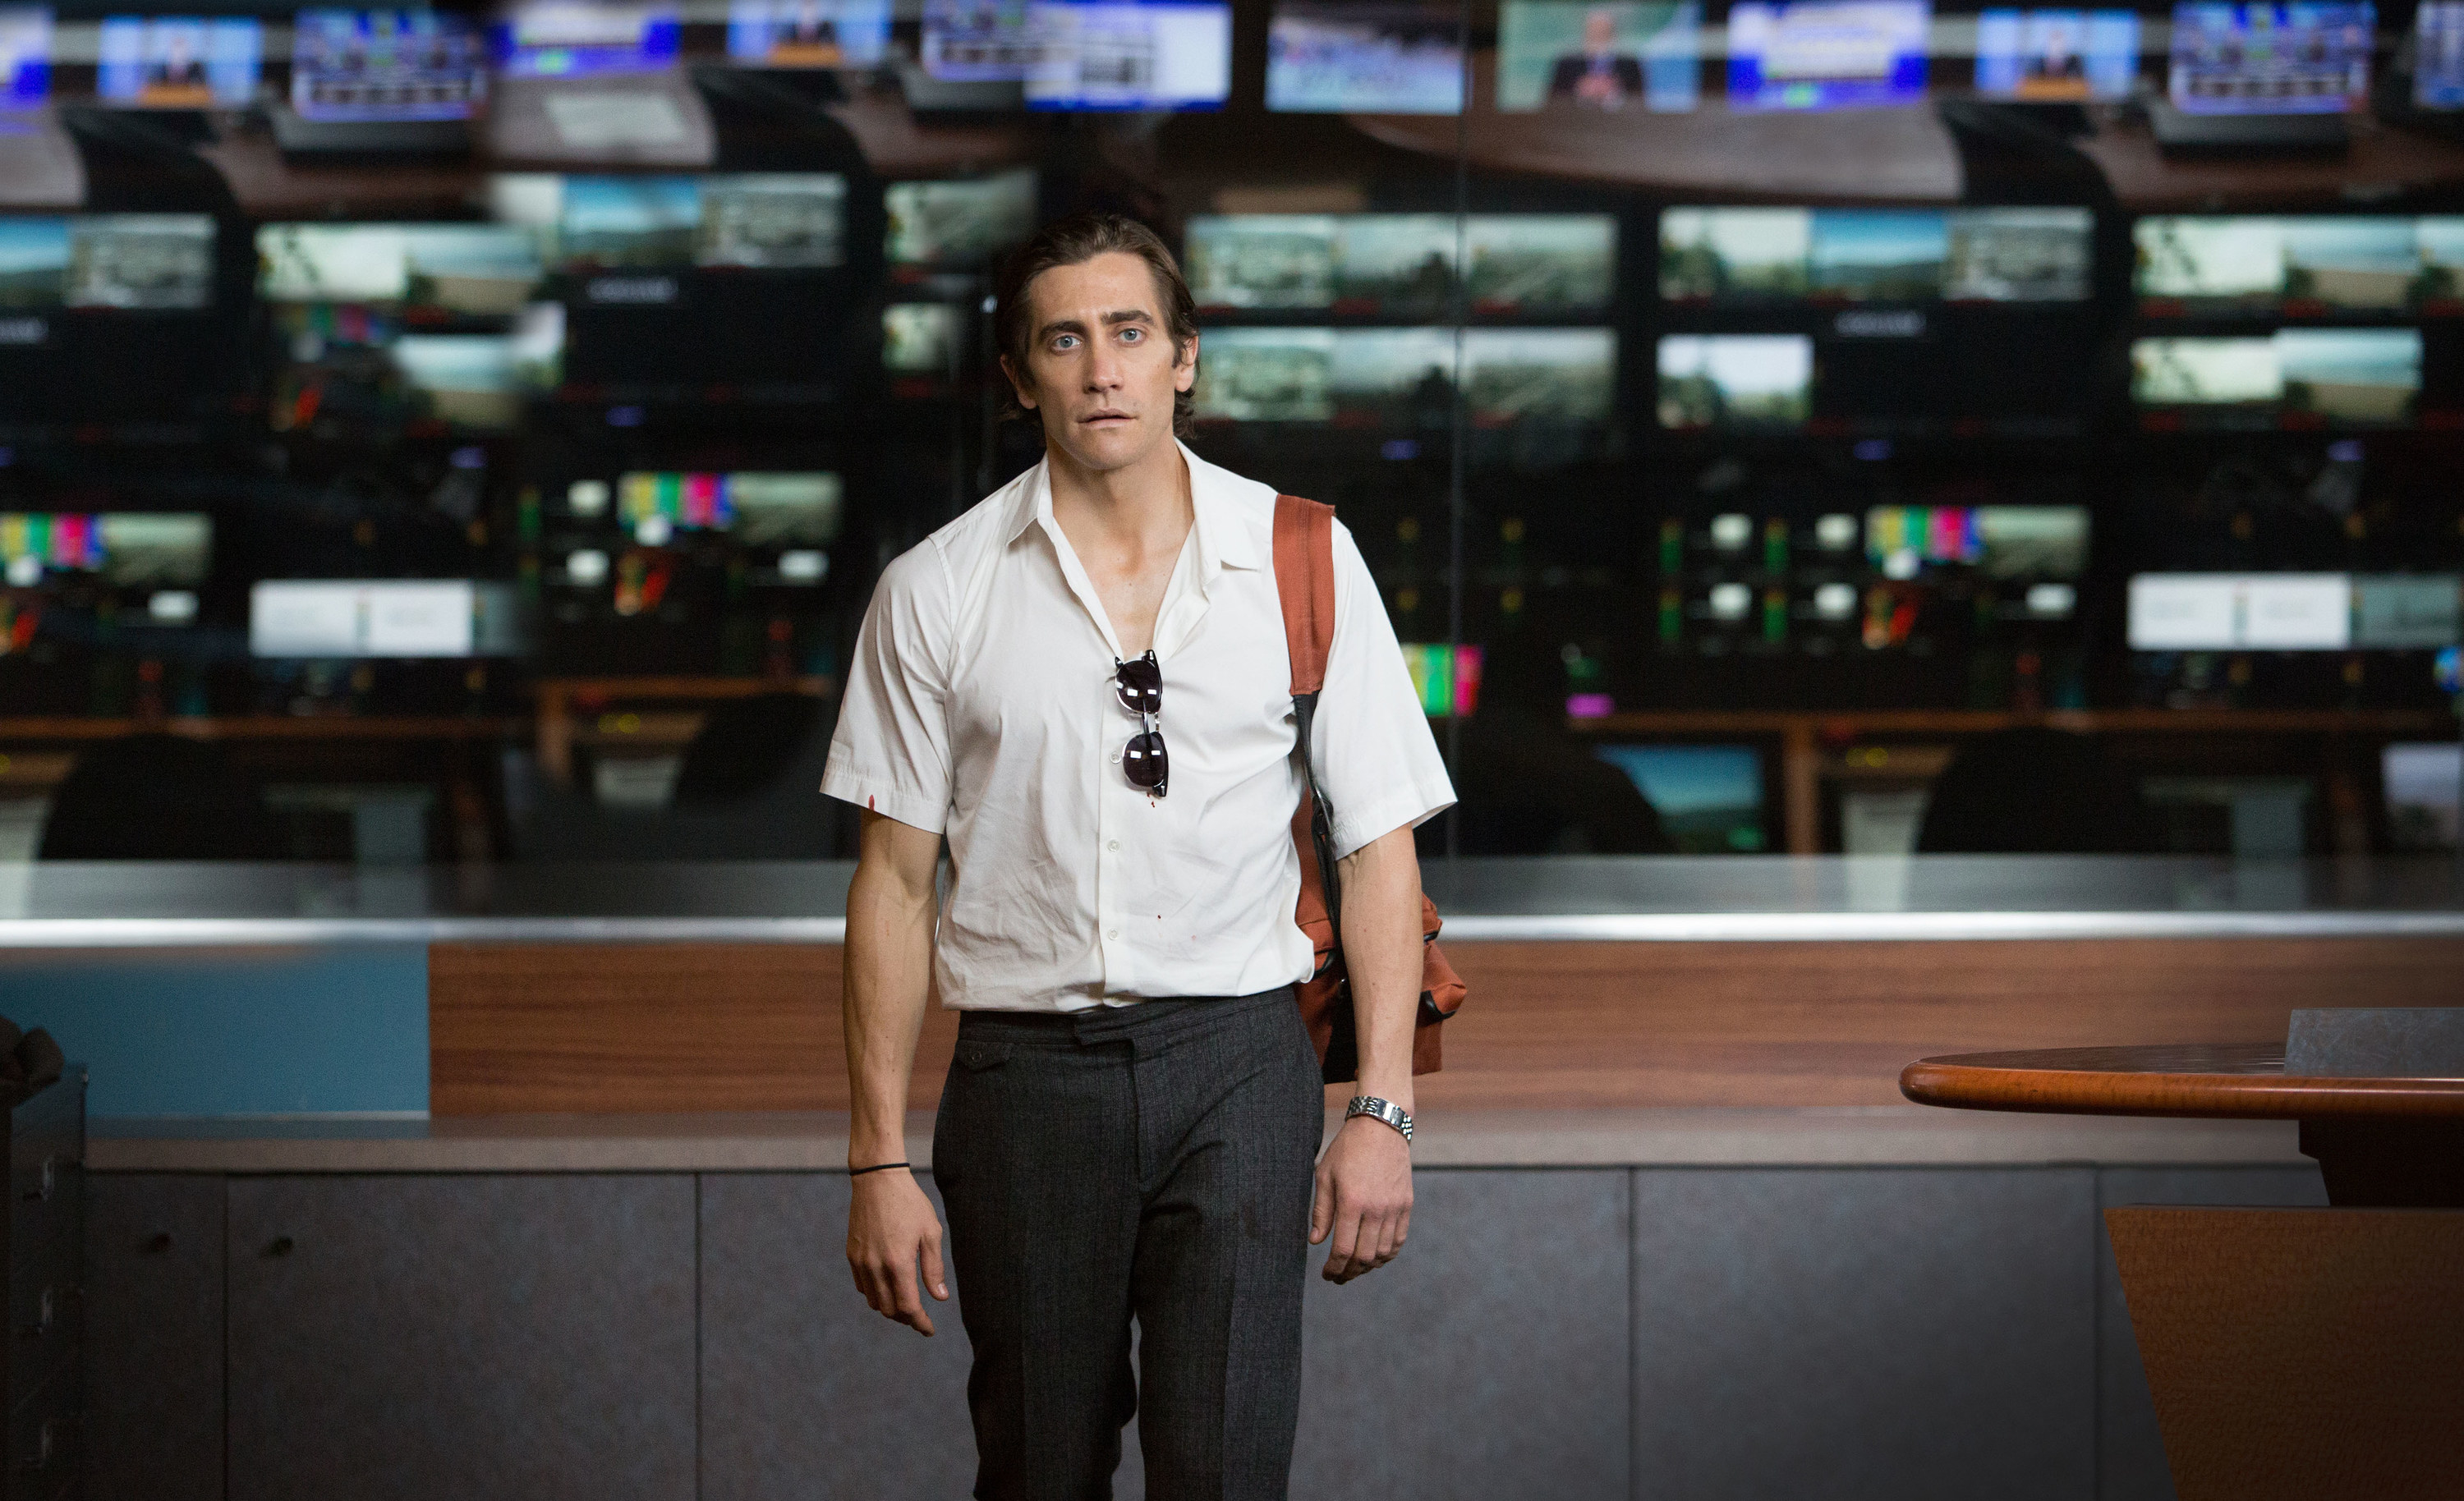 Jake Gyllenhaal stands in a news studio